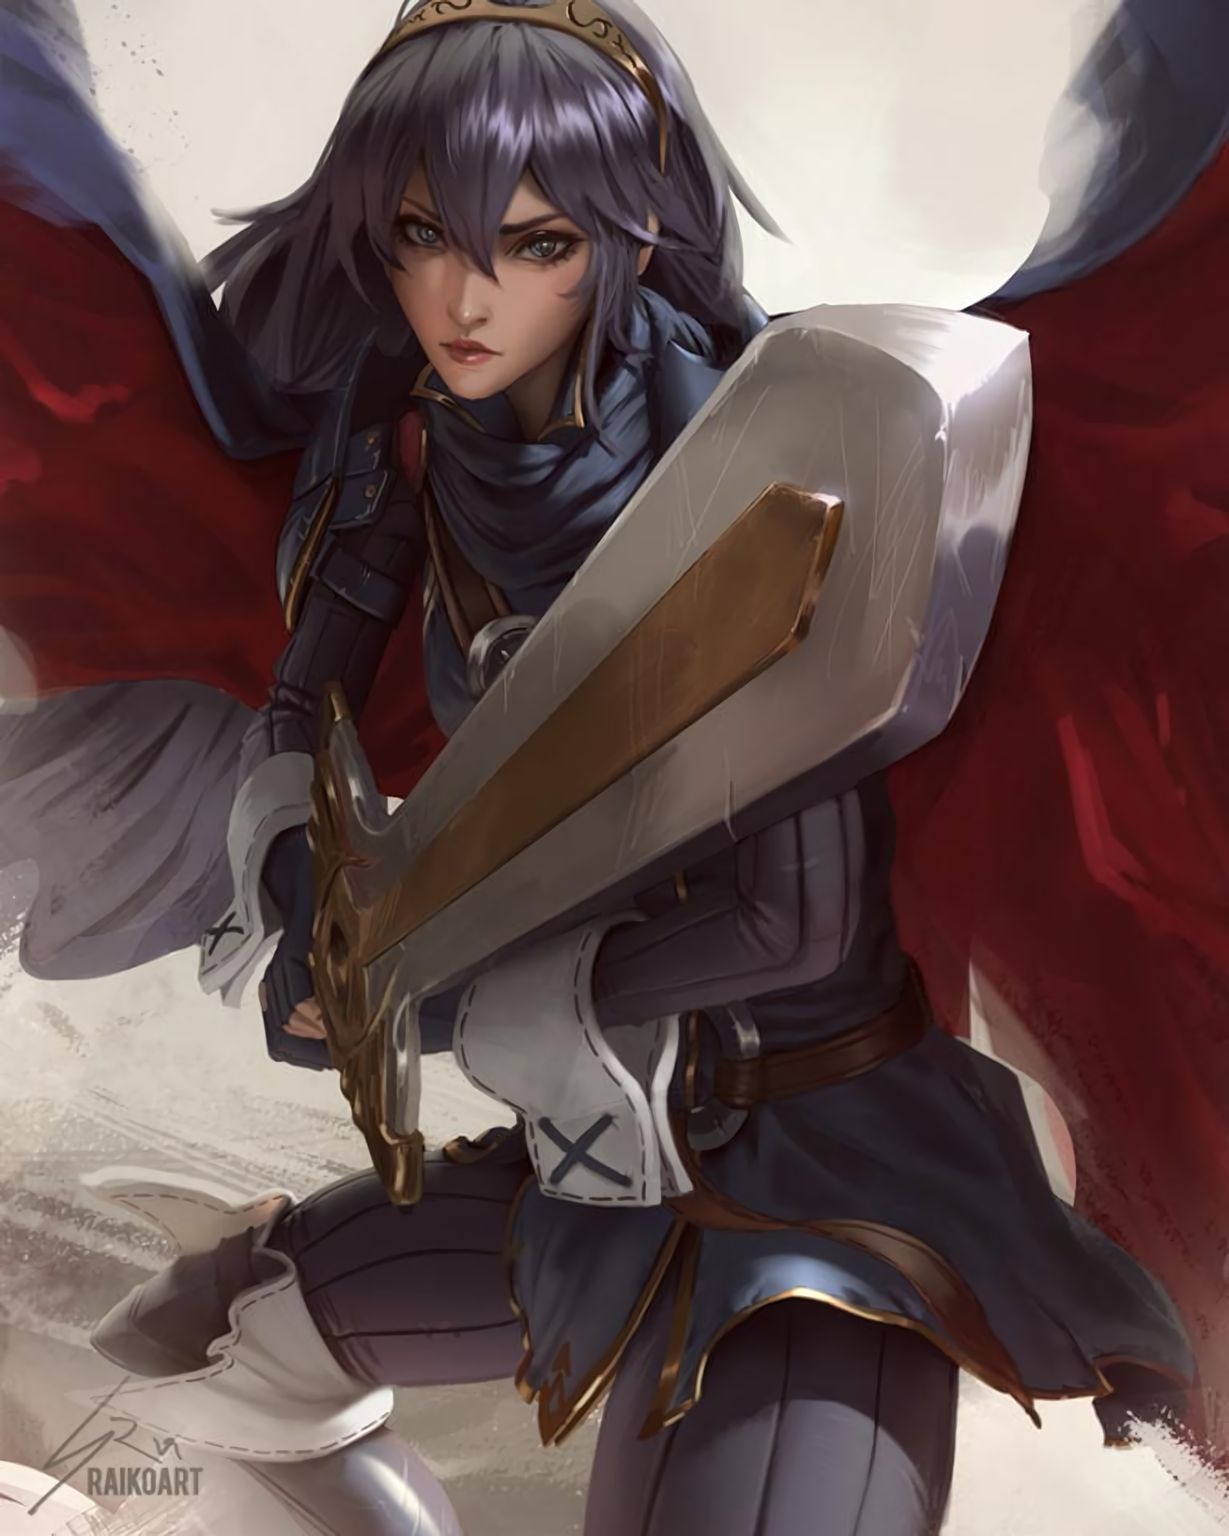 Beautiful girl Lucina with sword: Fire Emblem art: Other games (Artist: Raiko)